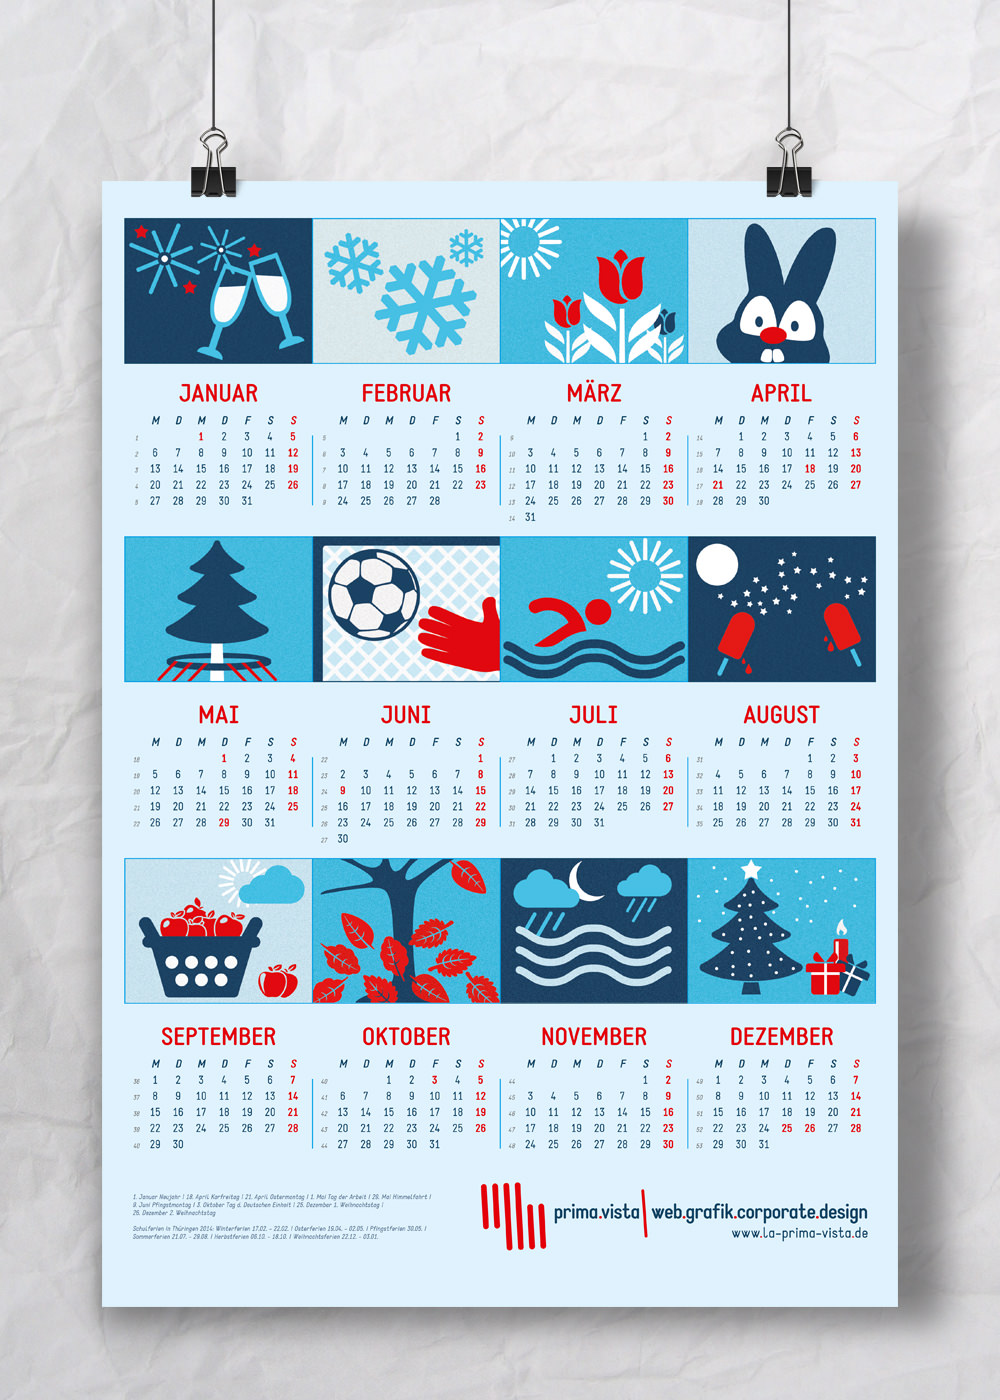 Kalender2014